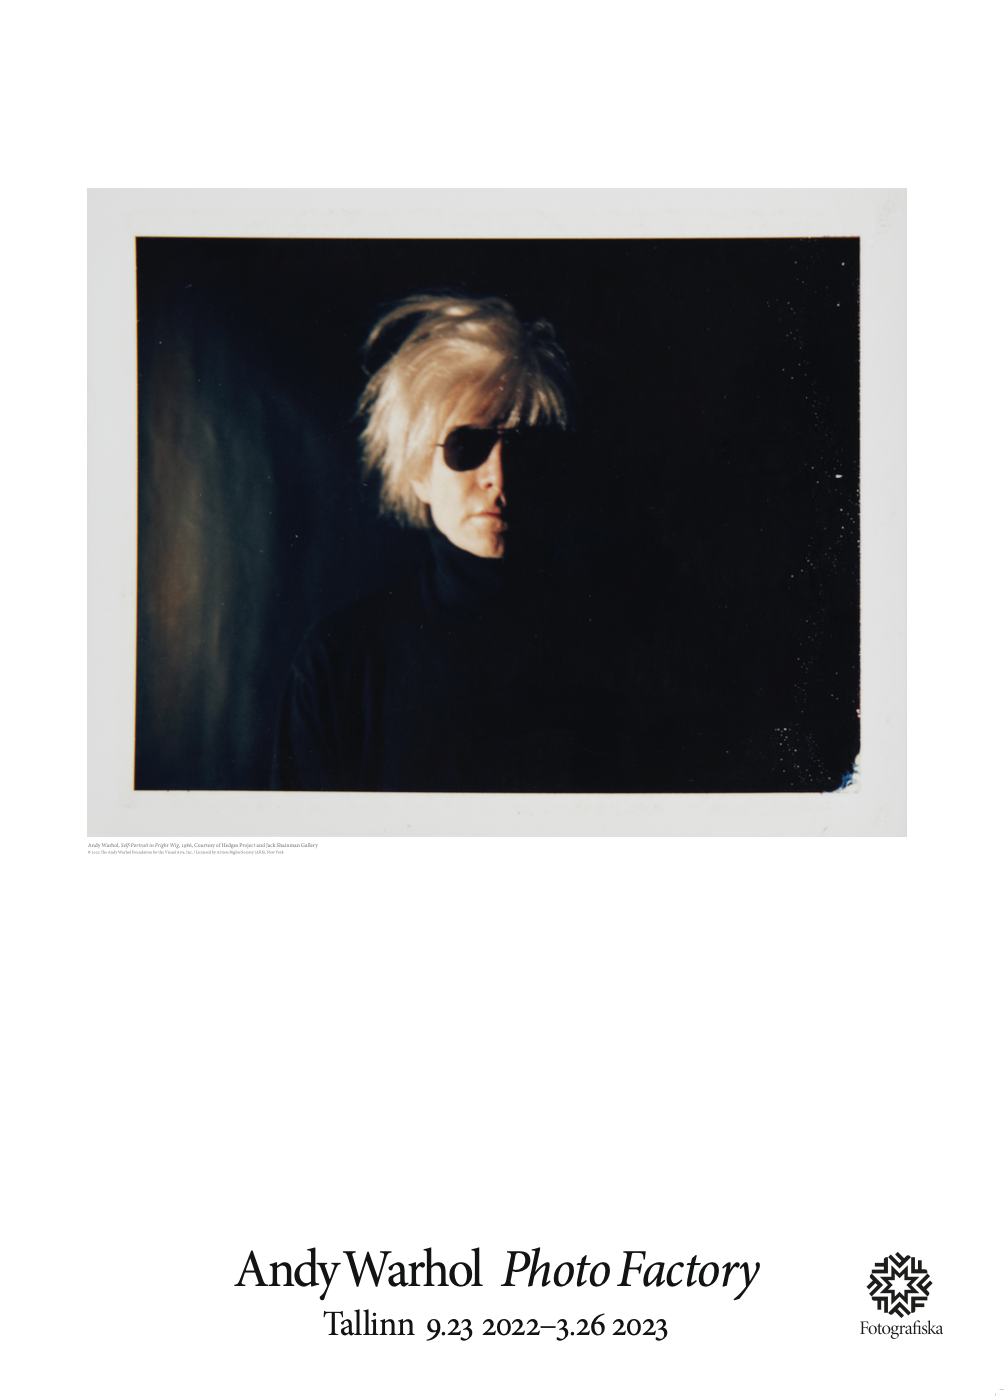 Andy Warhol, Self-Portrait in Fright Wig #6968